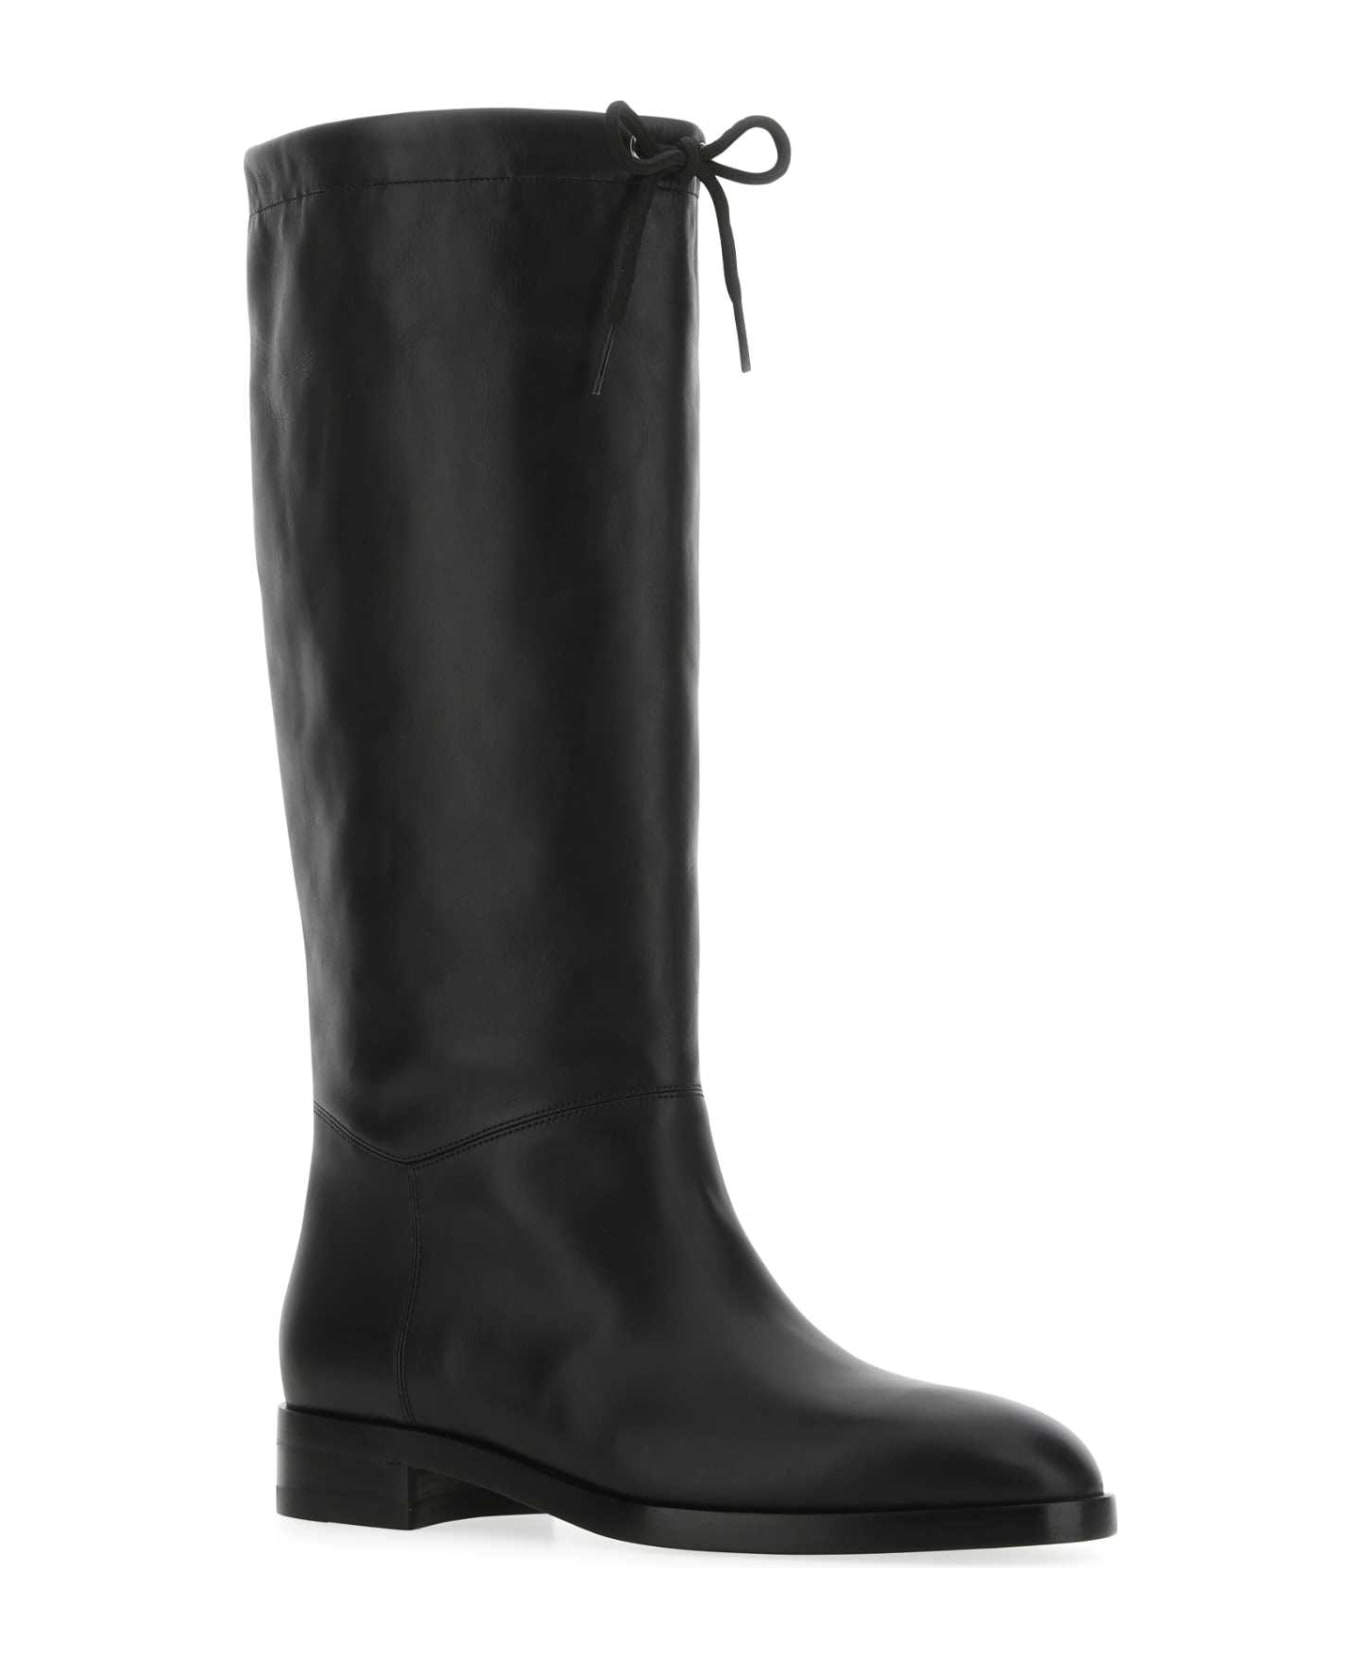 Gucci Black Leather Boots - Black ブーツ